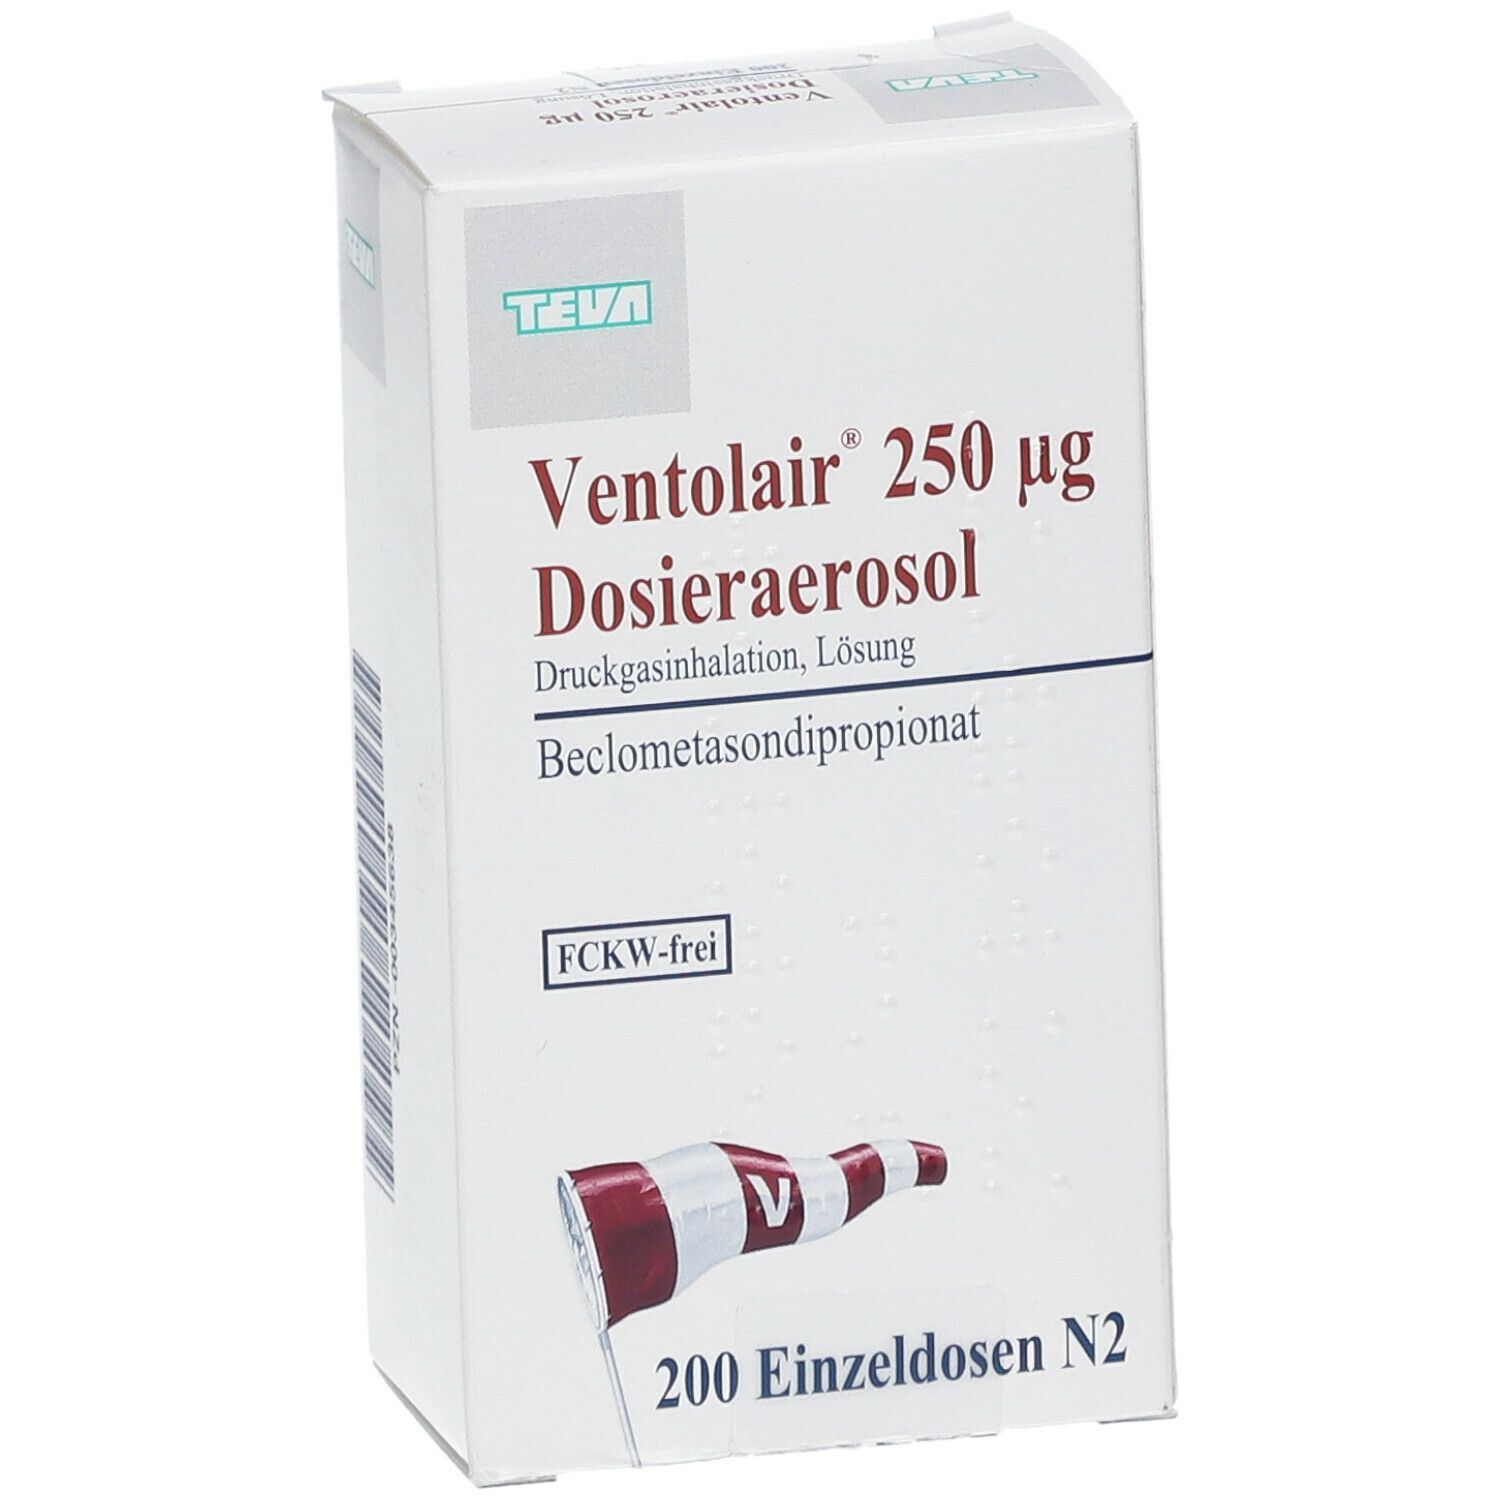 Ventolair® 250 µg